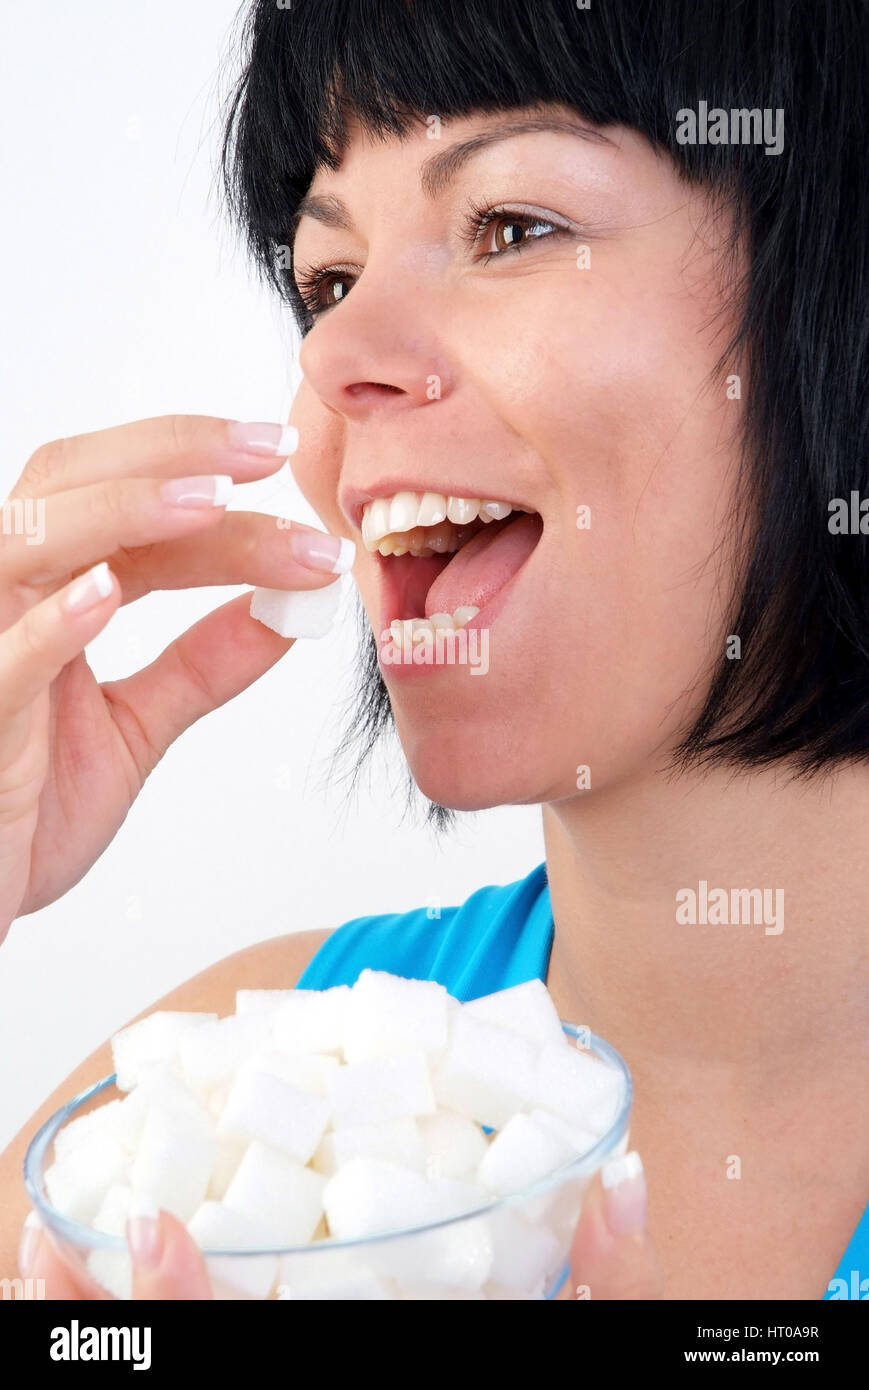 Frau isst W ?rfelzucker - femme mange de sucre forfaitaire Banque D'Images